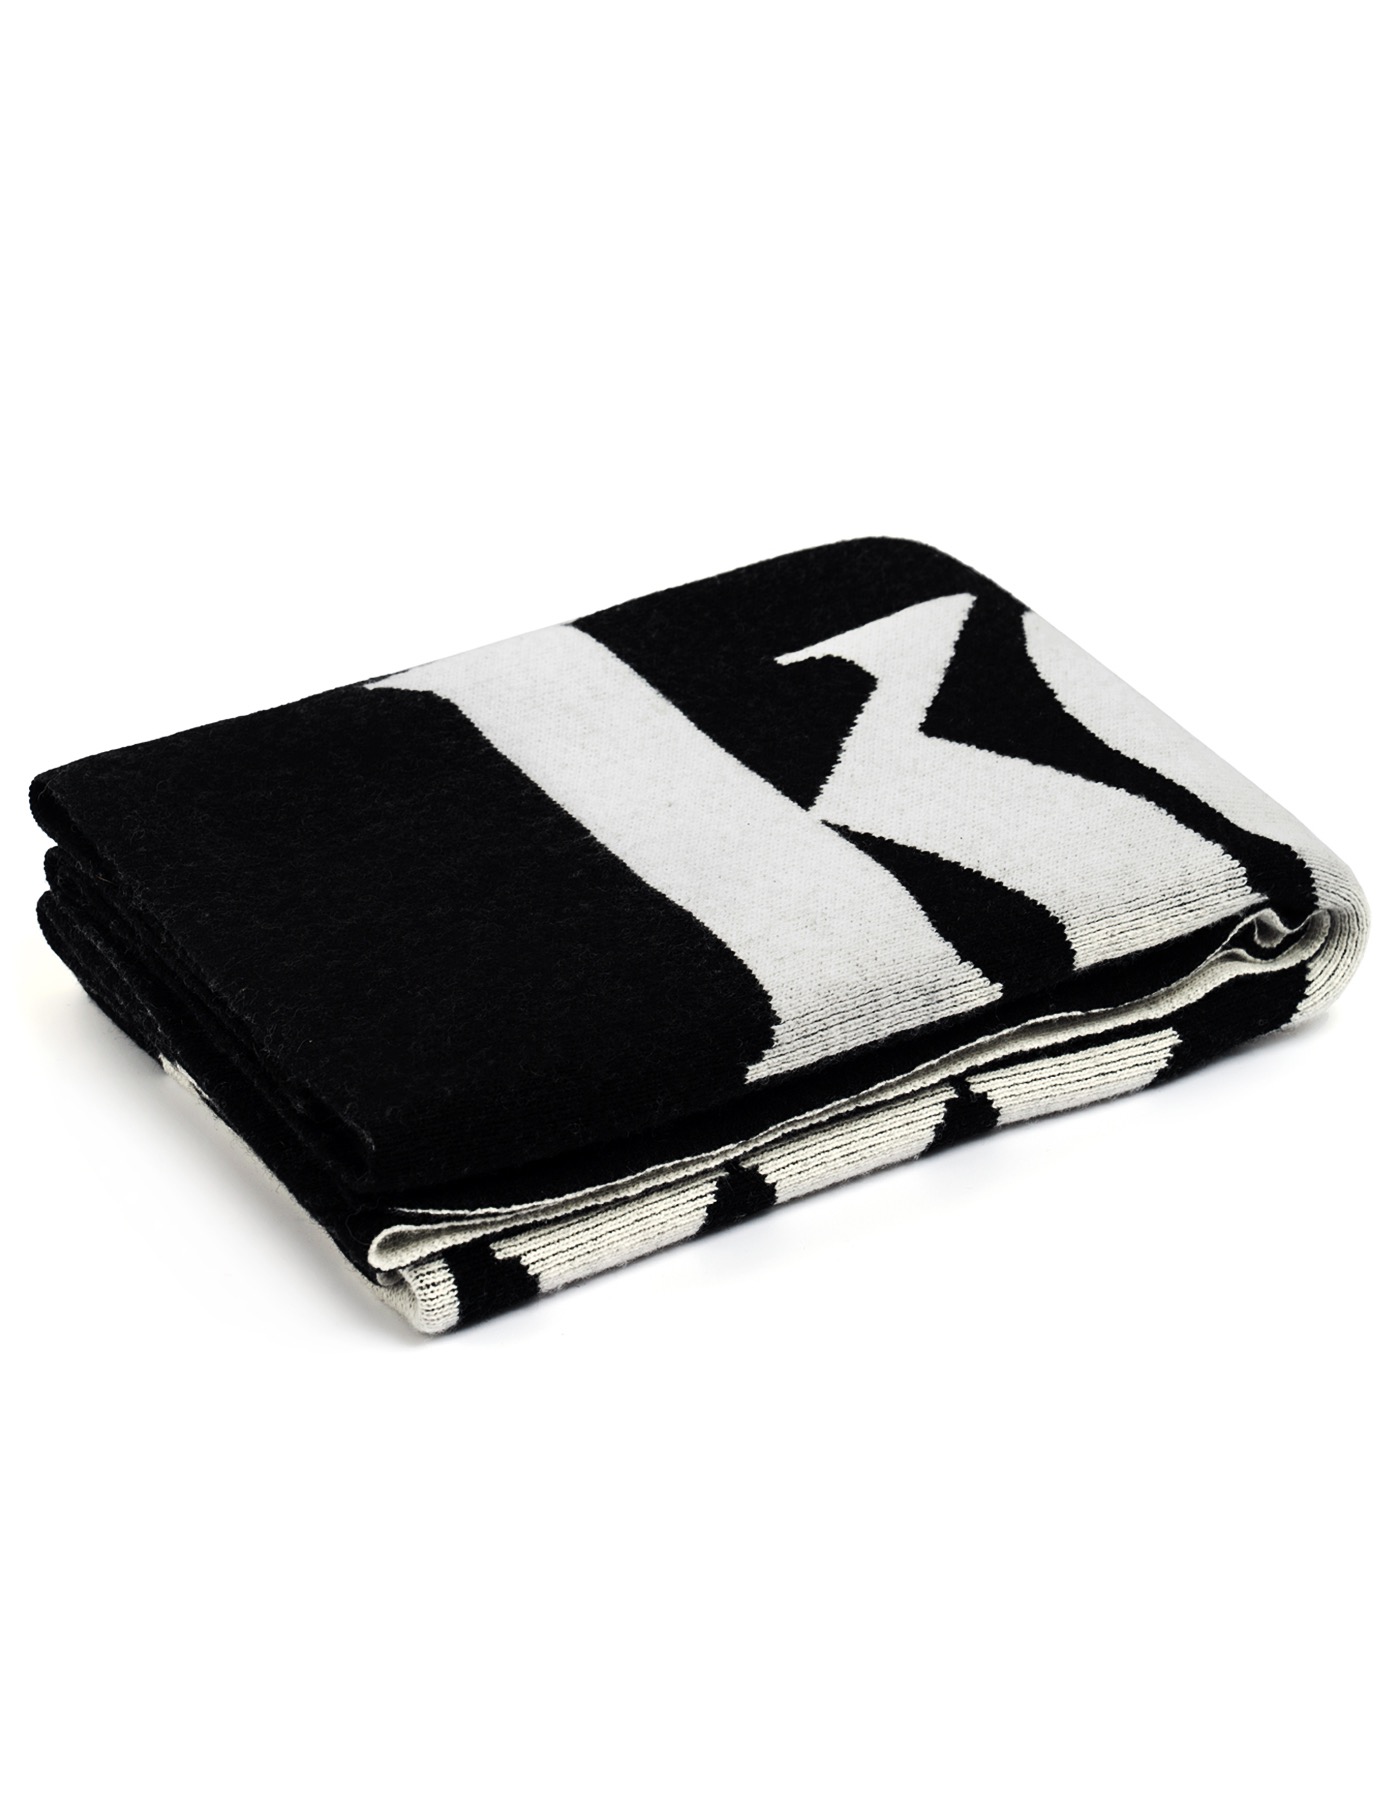 KRB Logo Wool Blanket - Black/White